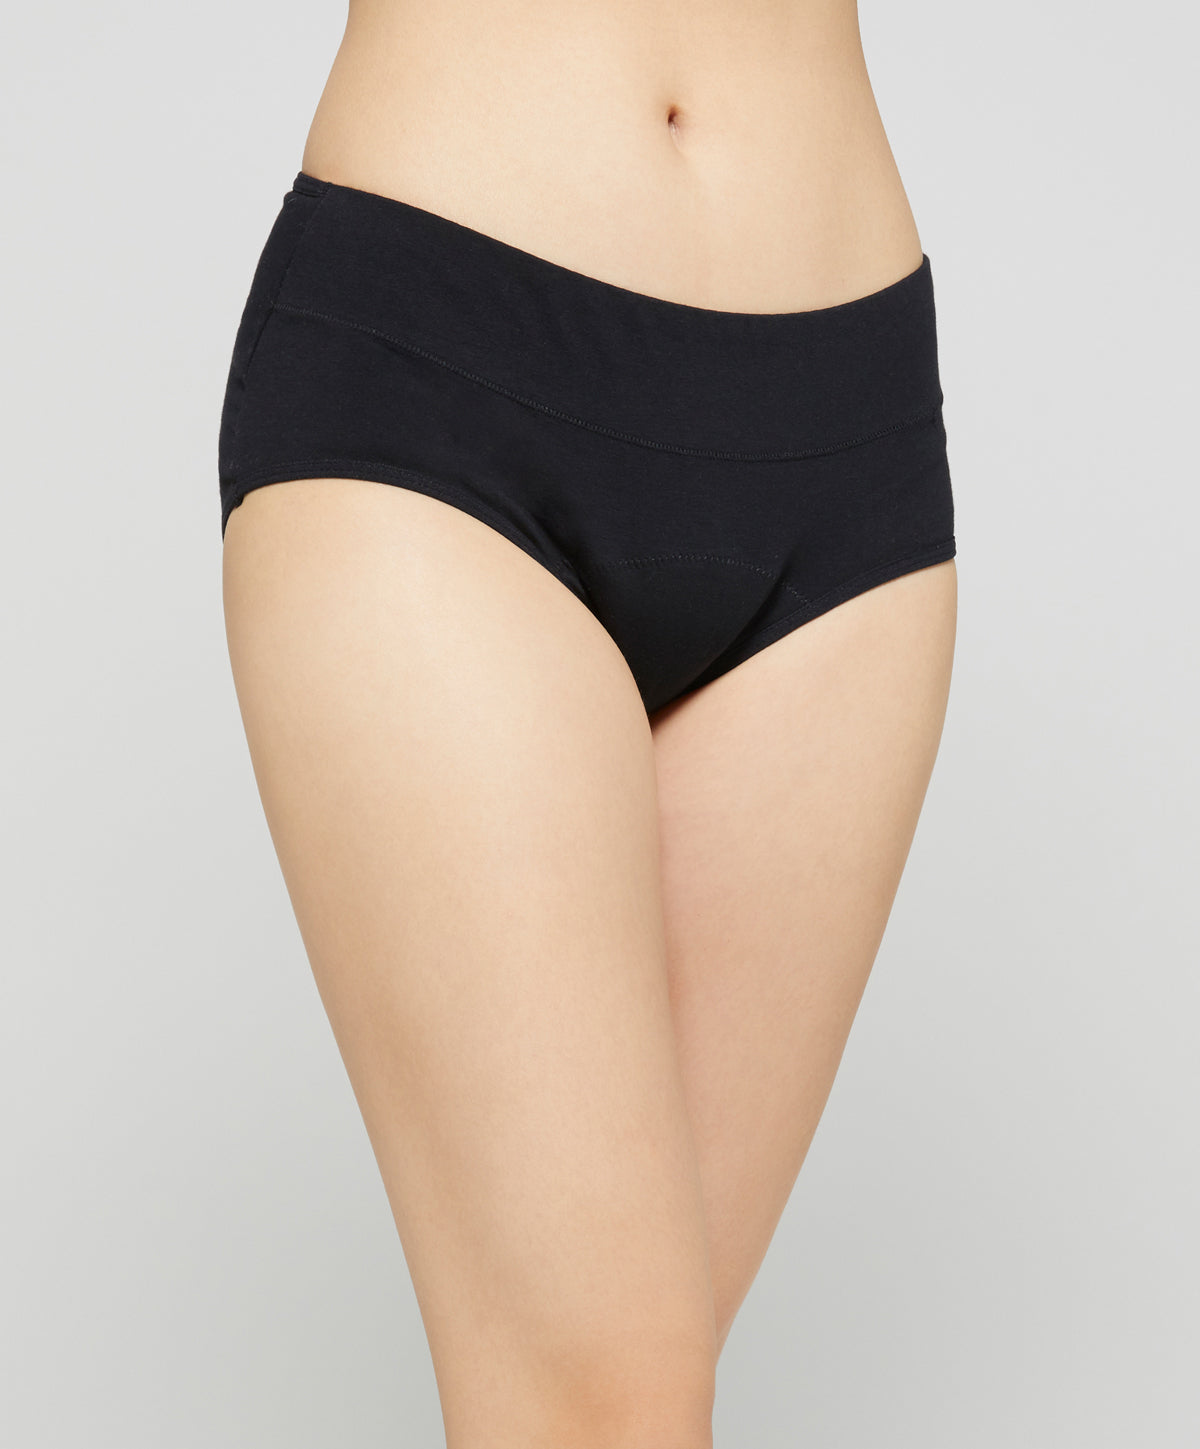  Women's Maximum Absorbency Reusable Bladder Control Panties  XLarge (Single) : Health & Household